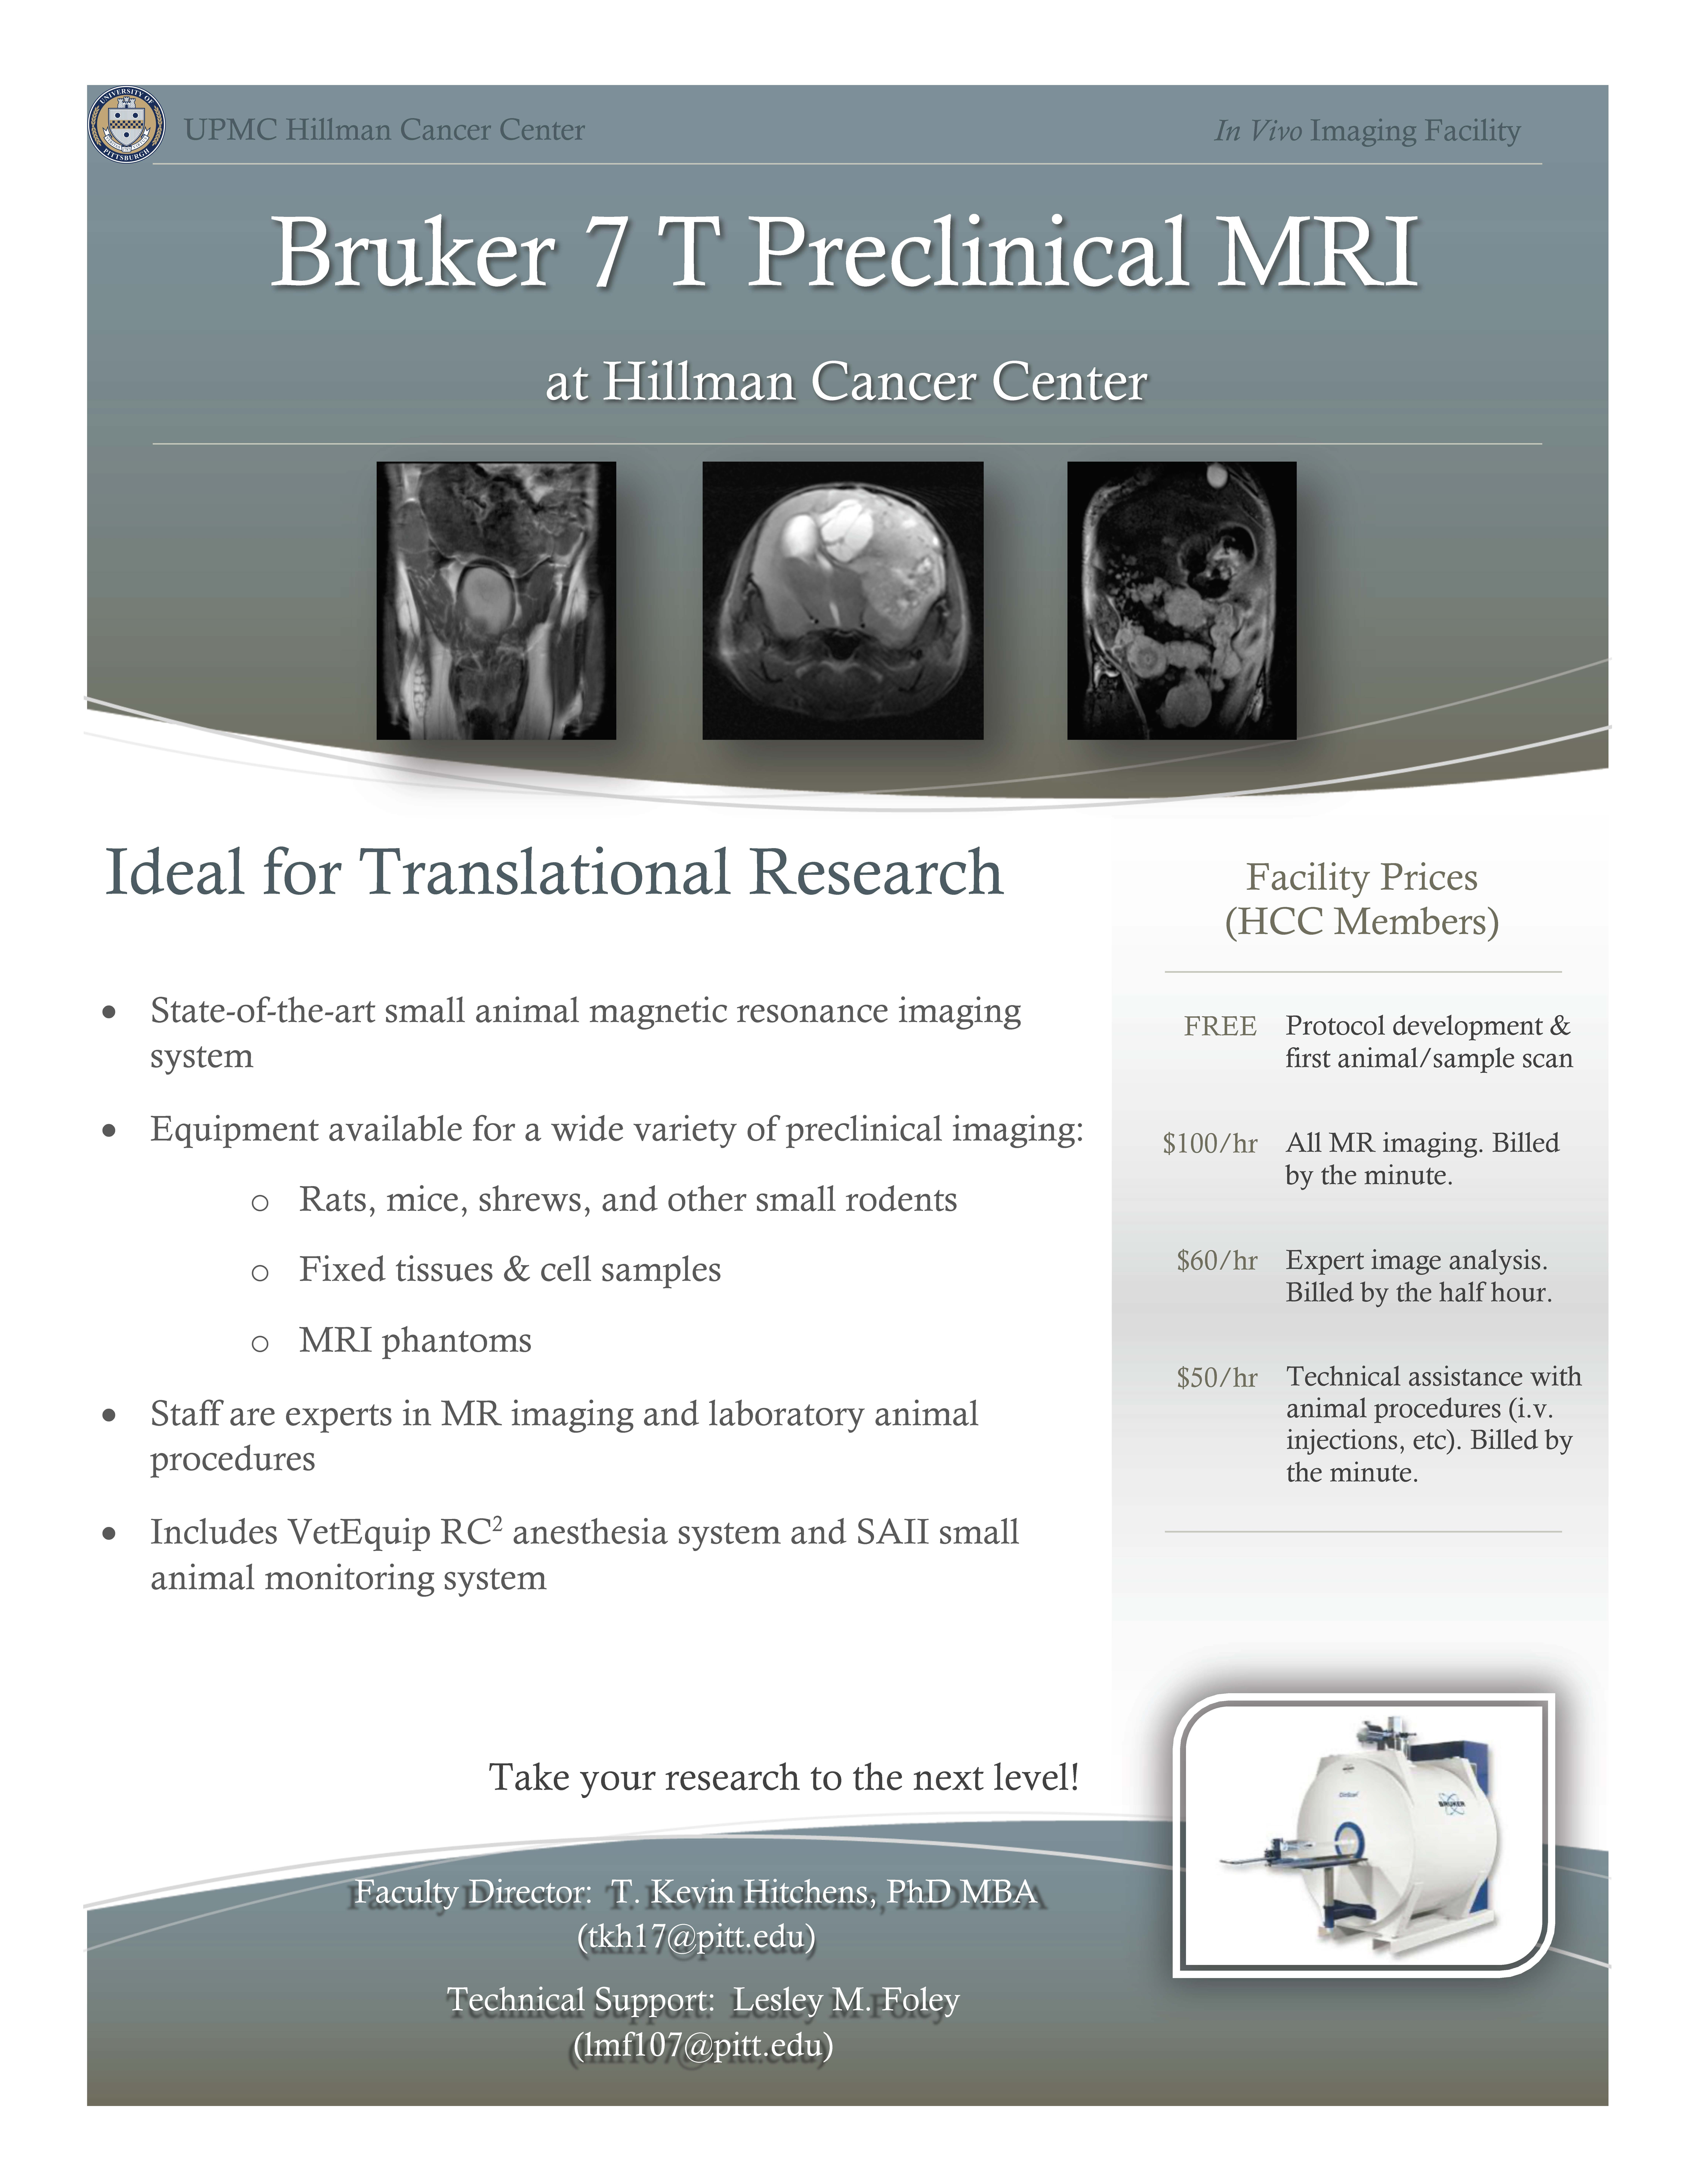 Bruker 7 T Preclinical MRI at Hillman Cancer Center